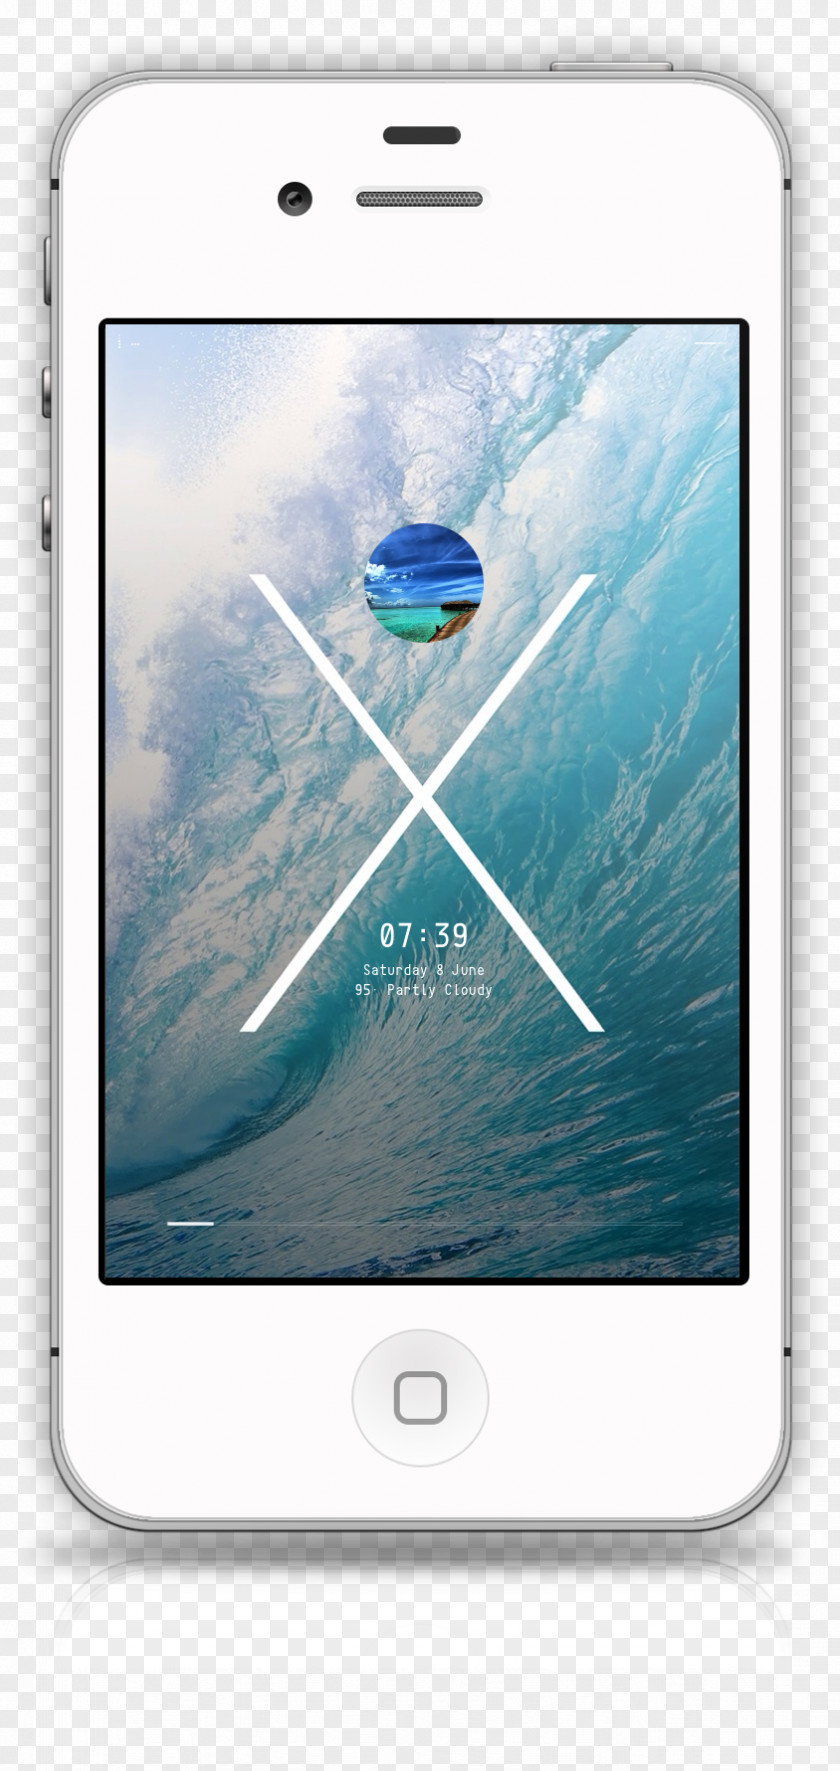 Sea Lions Smartphone Desktop Wallpaper IPhone MacOS Apple PNG